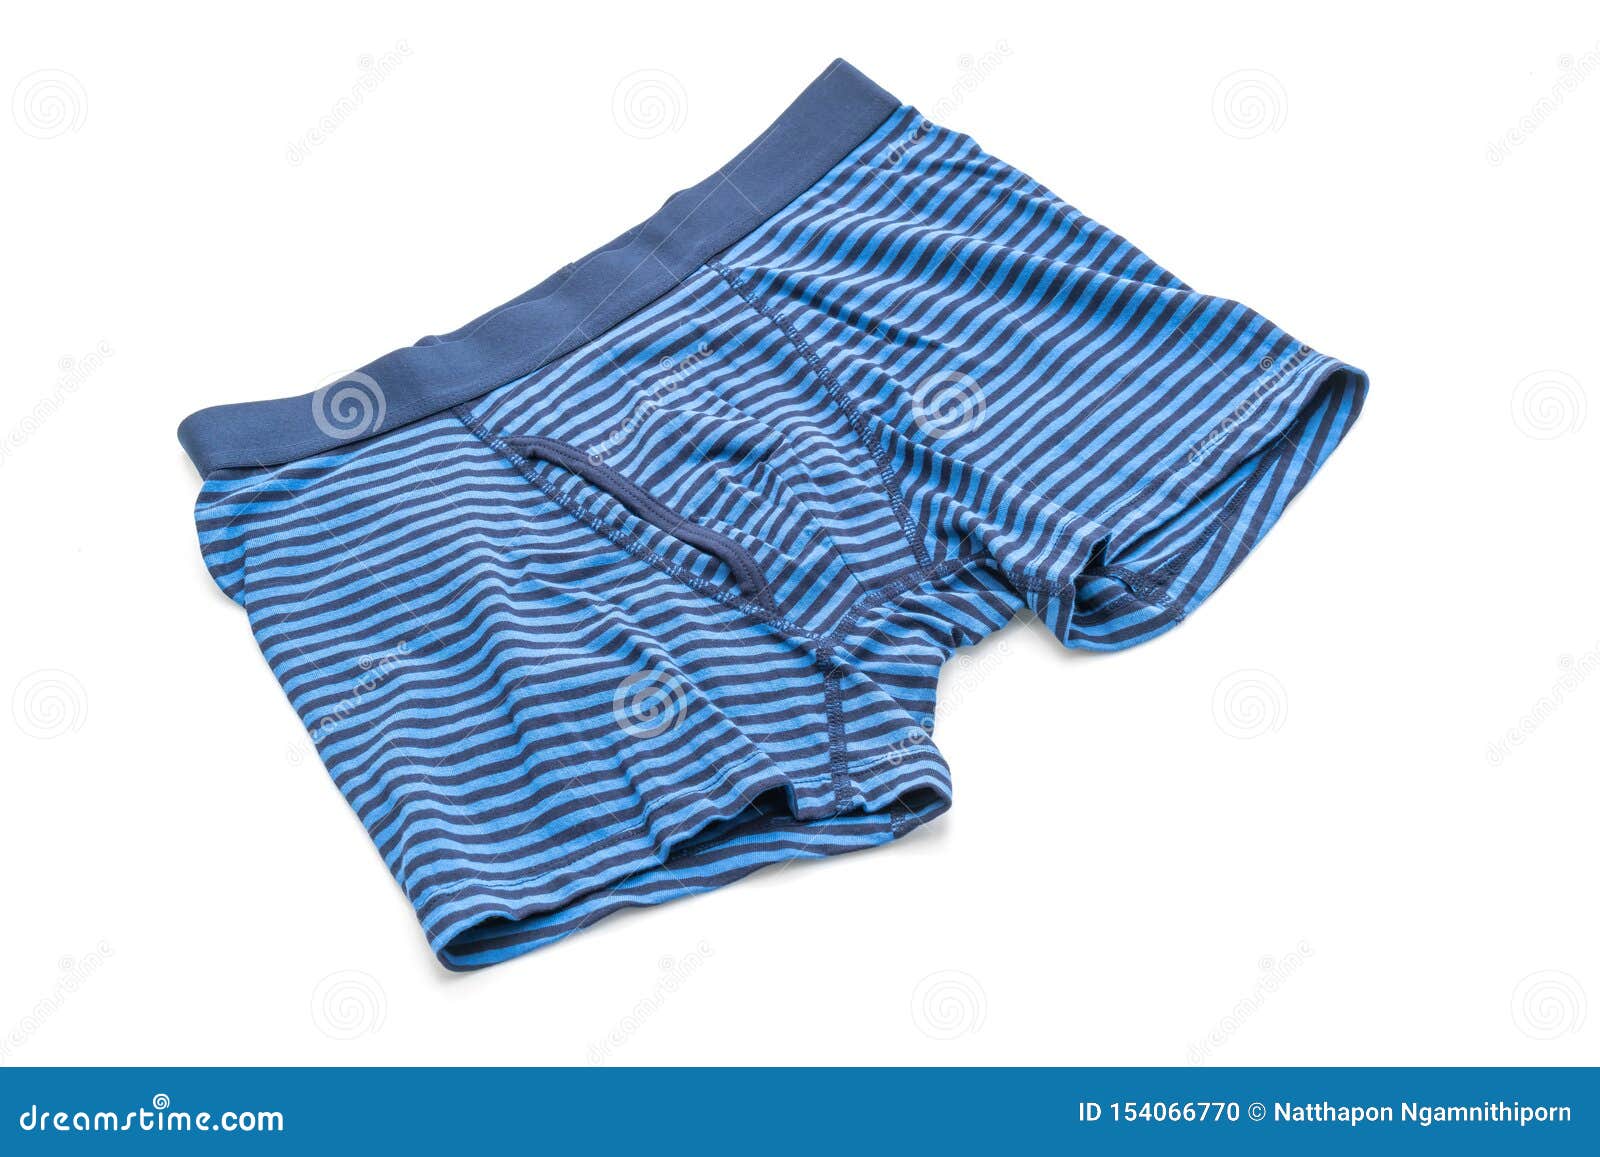 Striped men underwear stock photo. Image of apparel - 154066770